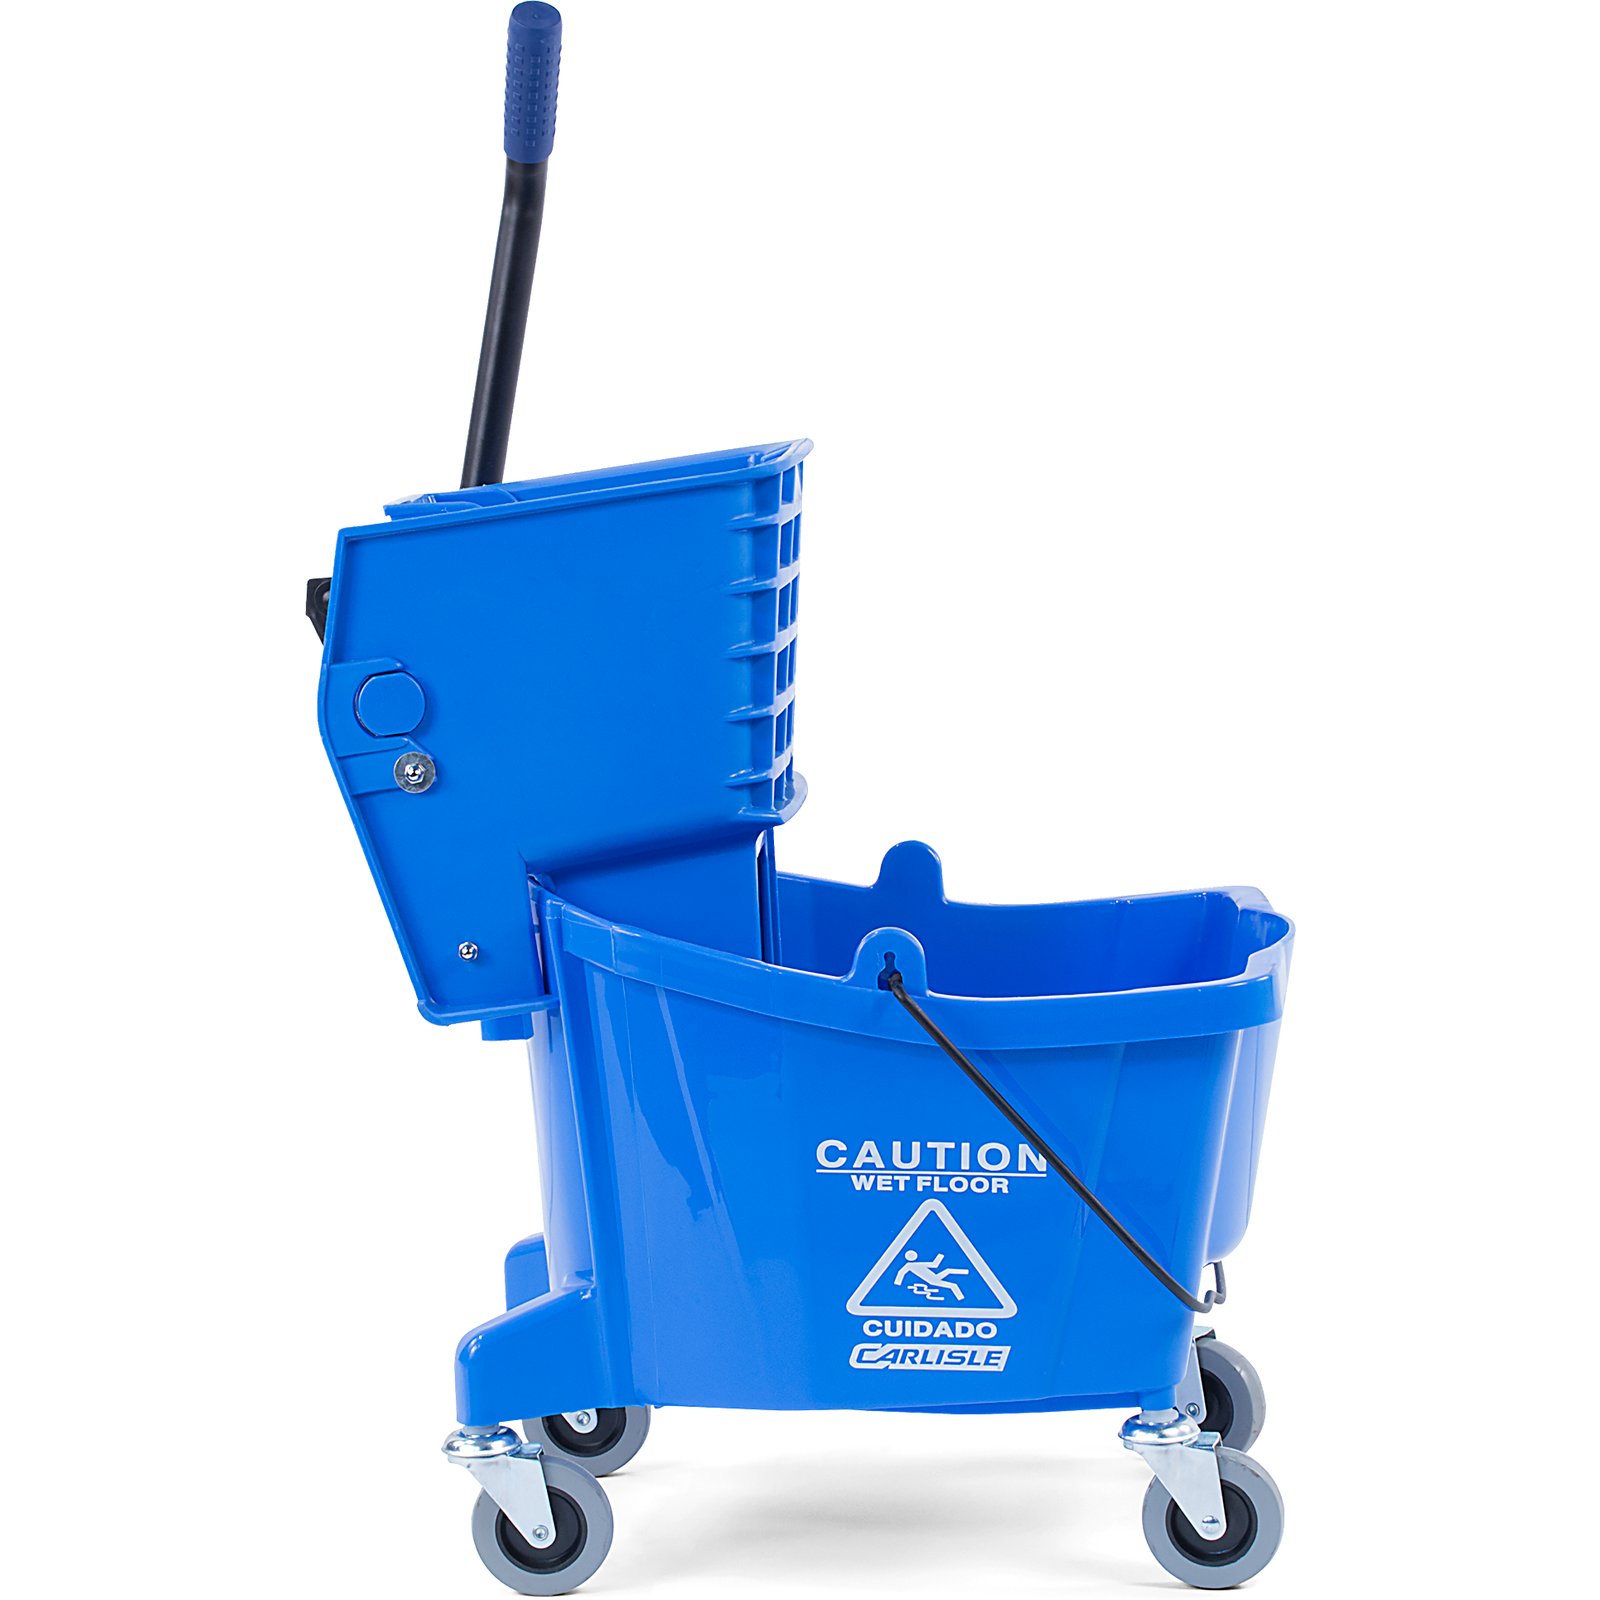 3690814 - Commercial Mop Bucket with Side-Press Wringer 26 Quart - Blue